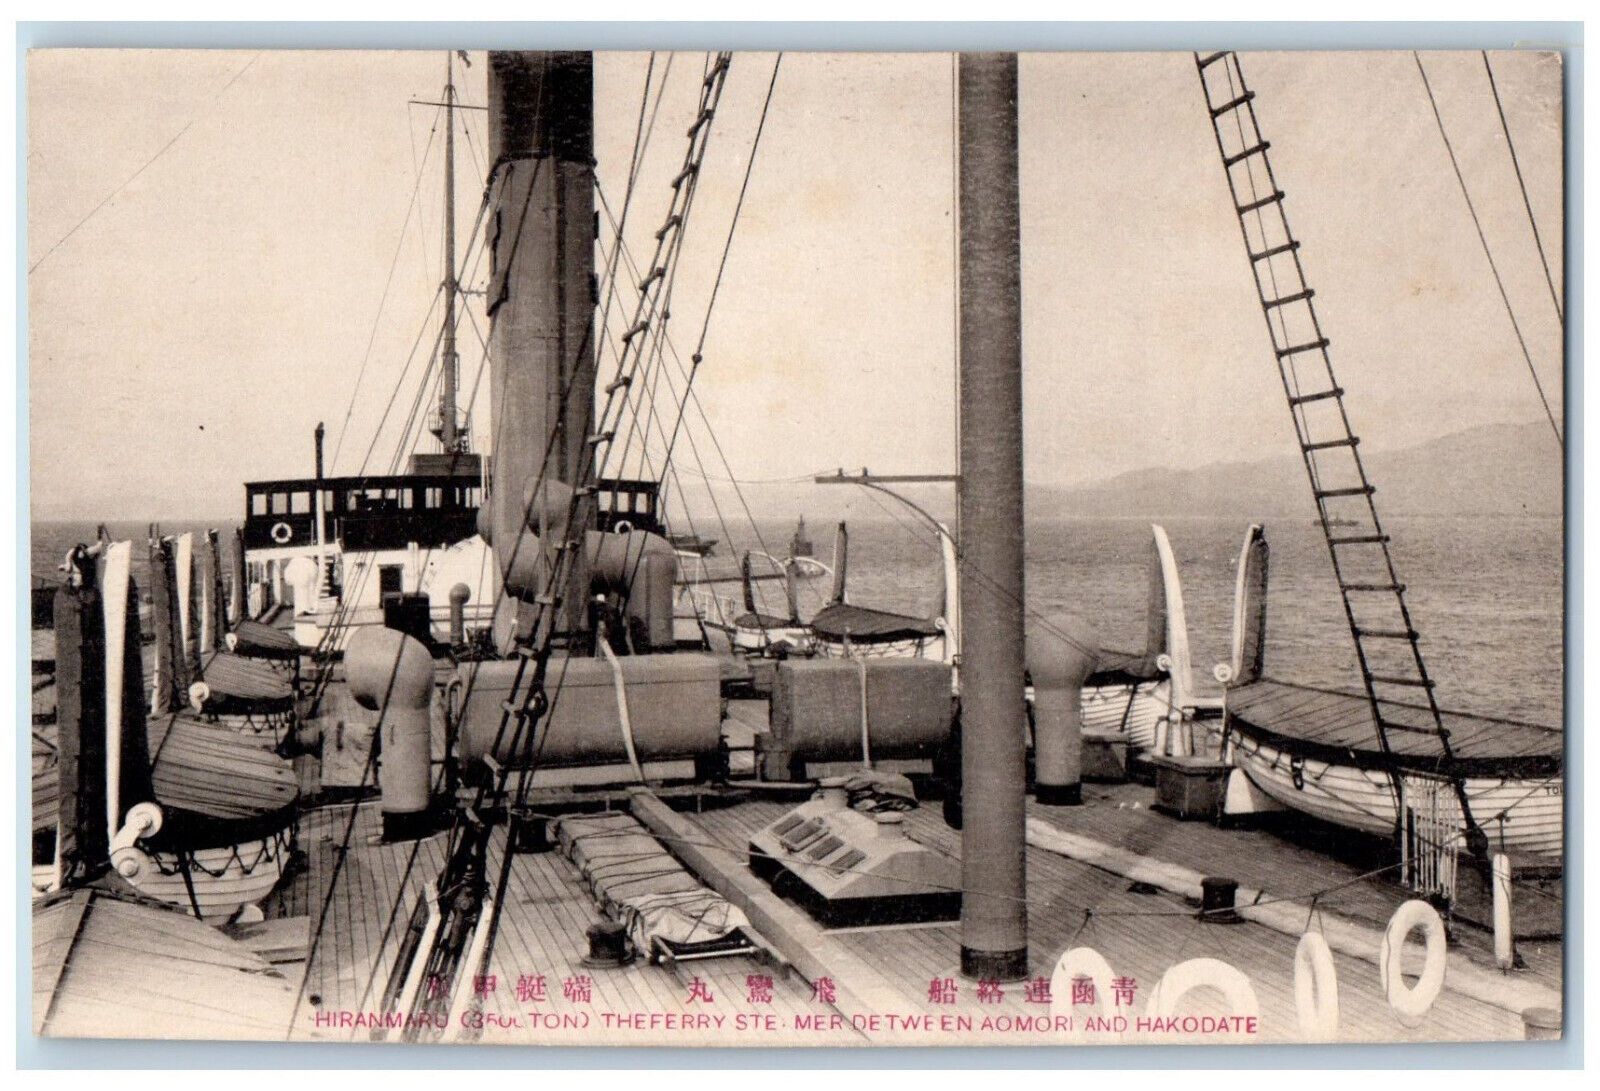 Hokkaido Japan Postcard The Ferry Steamer Between Aomori and Hakodate c1910